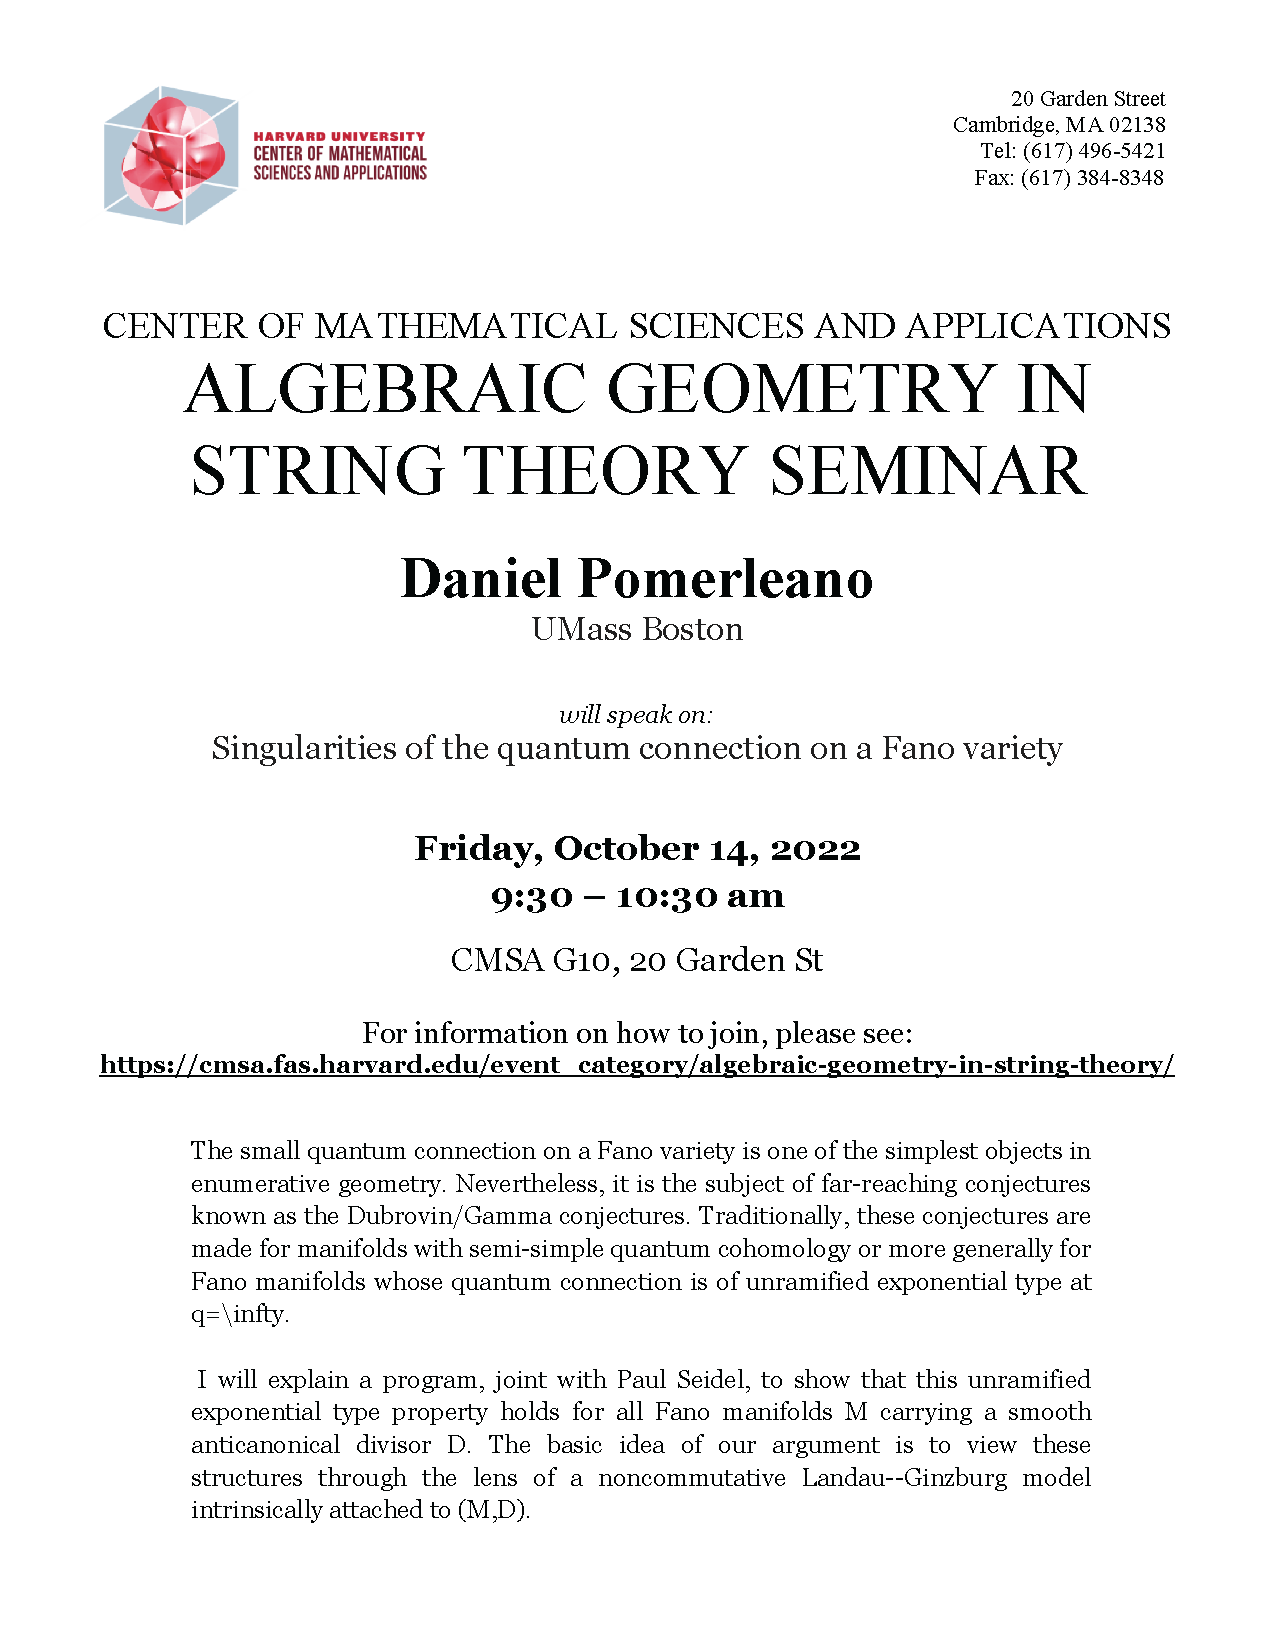 CMSA Algebraic Geometry in String Theory 10.14.2022